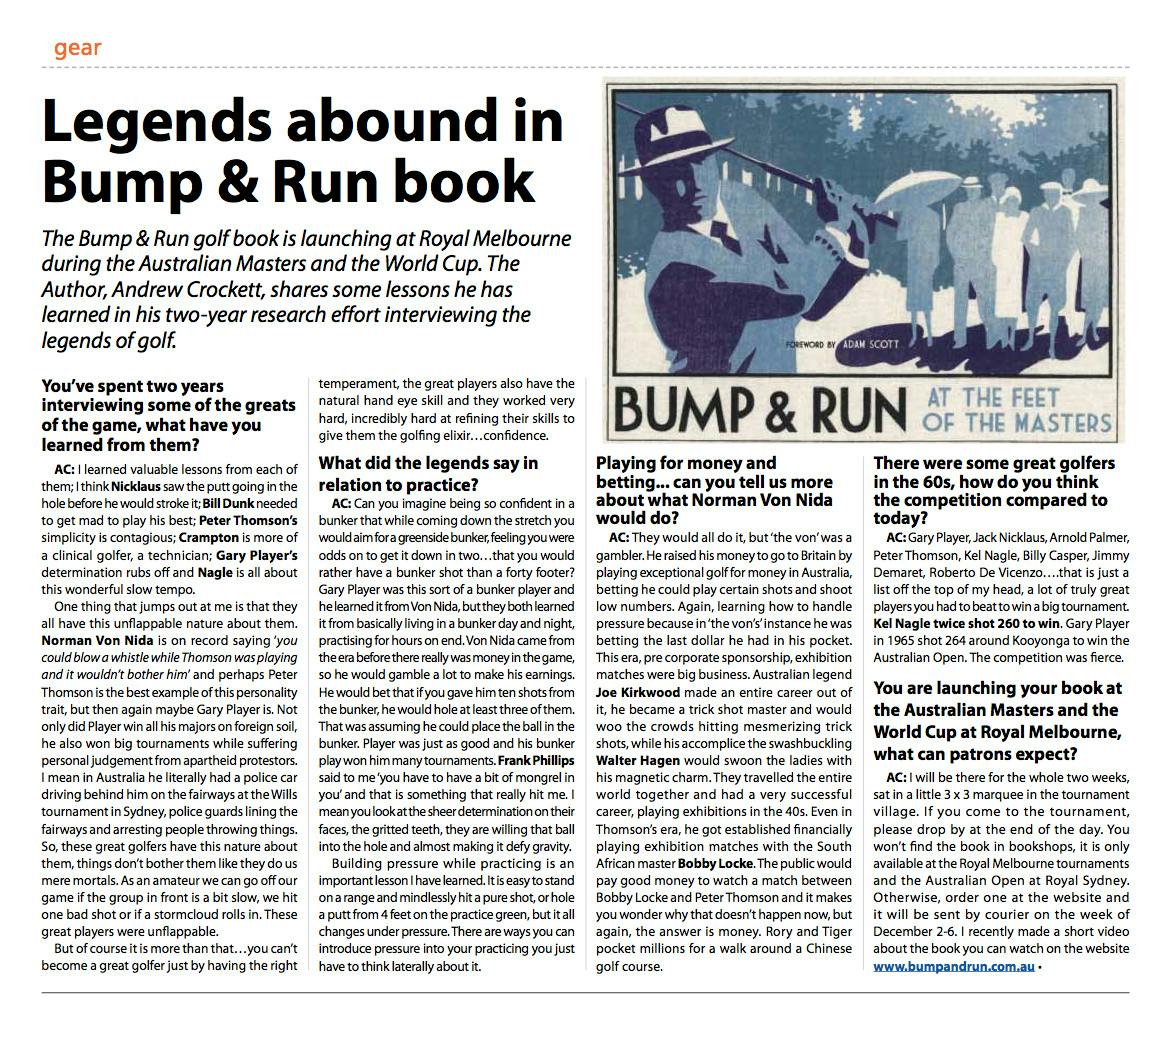  Bump & Run article